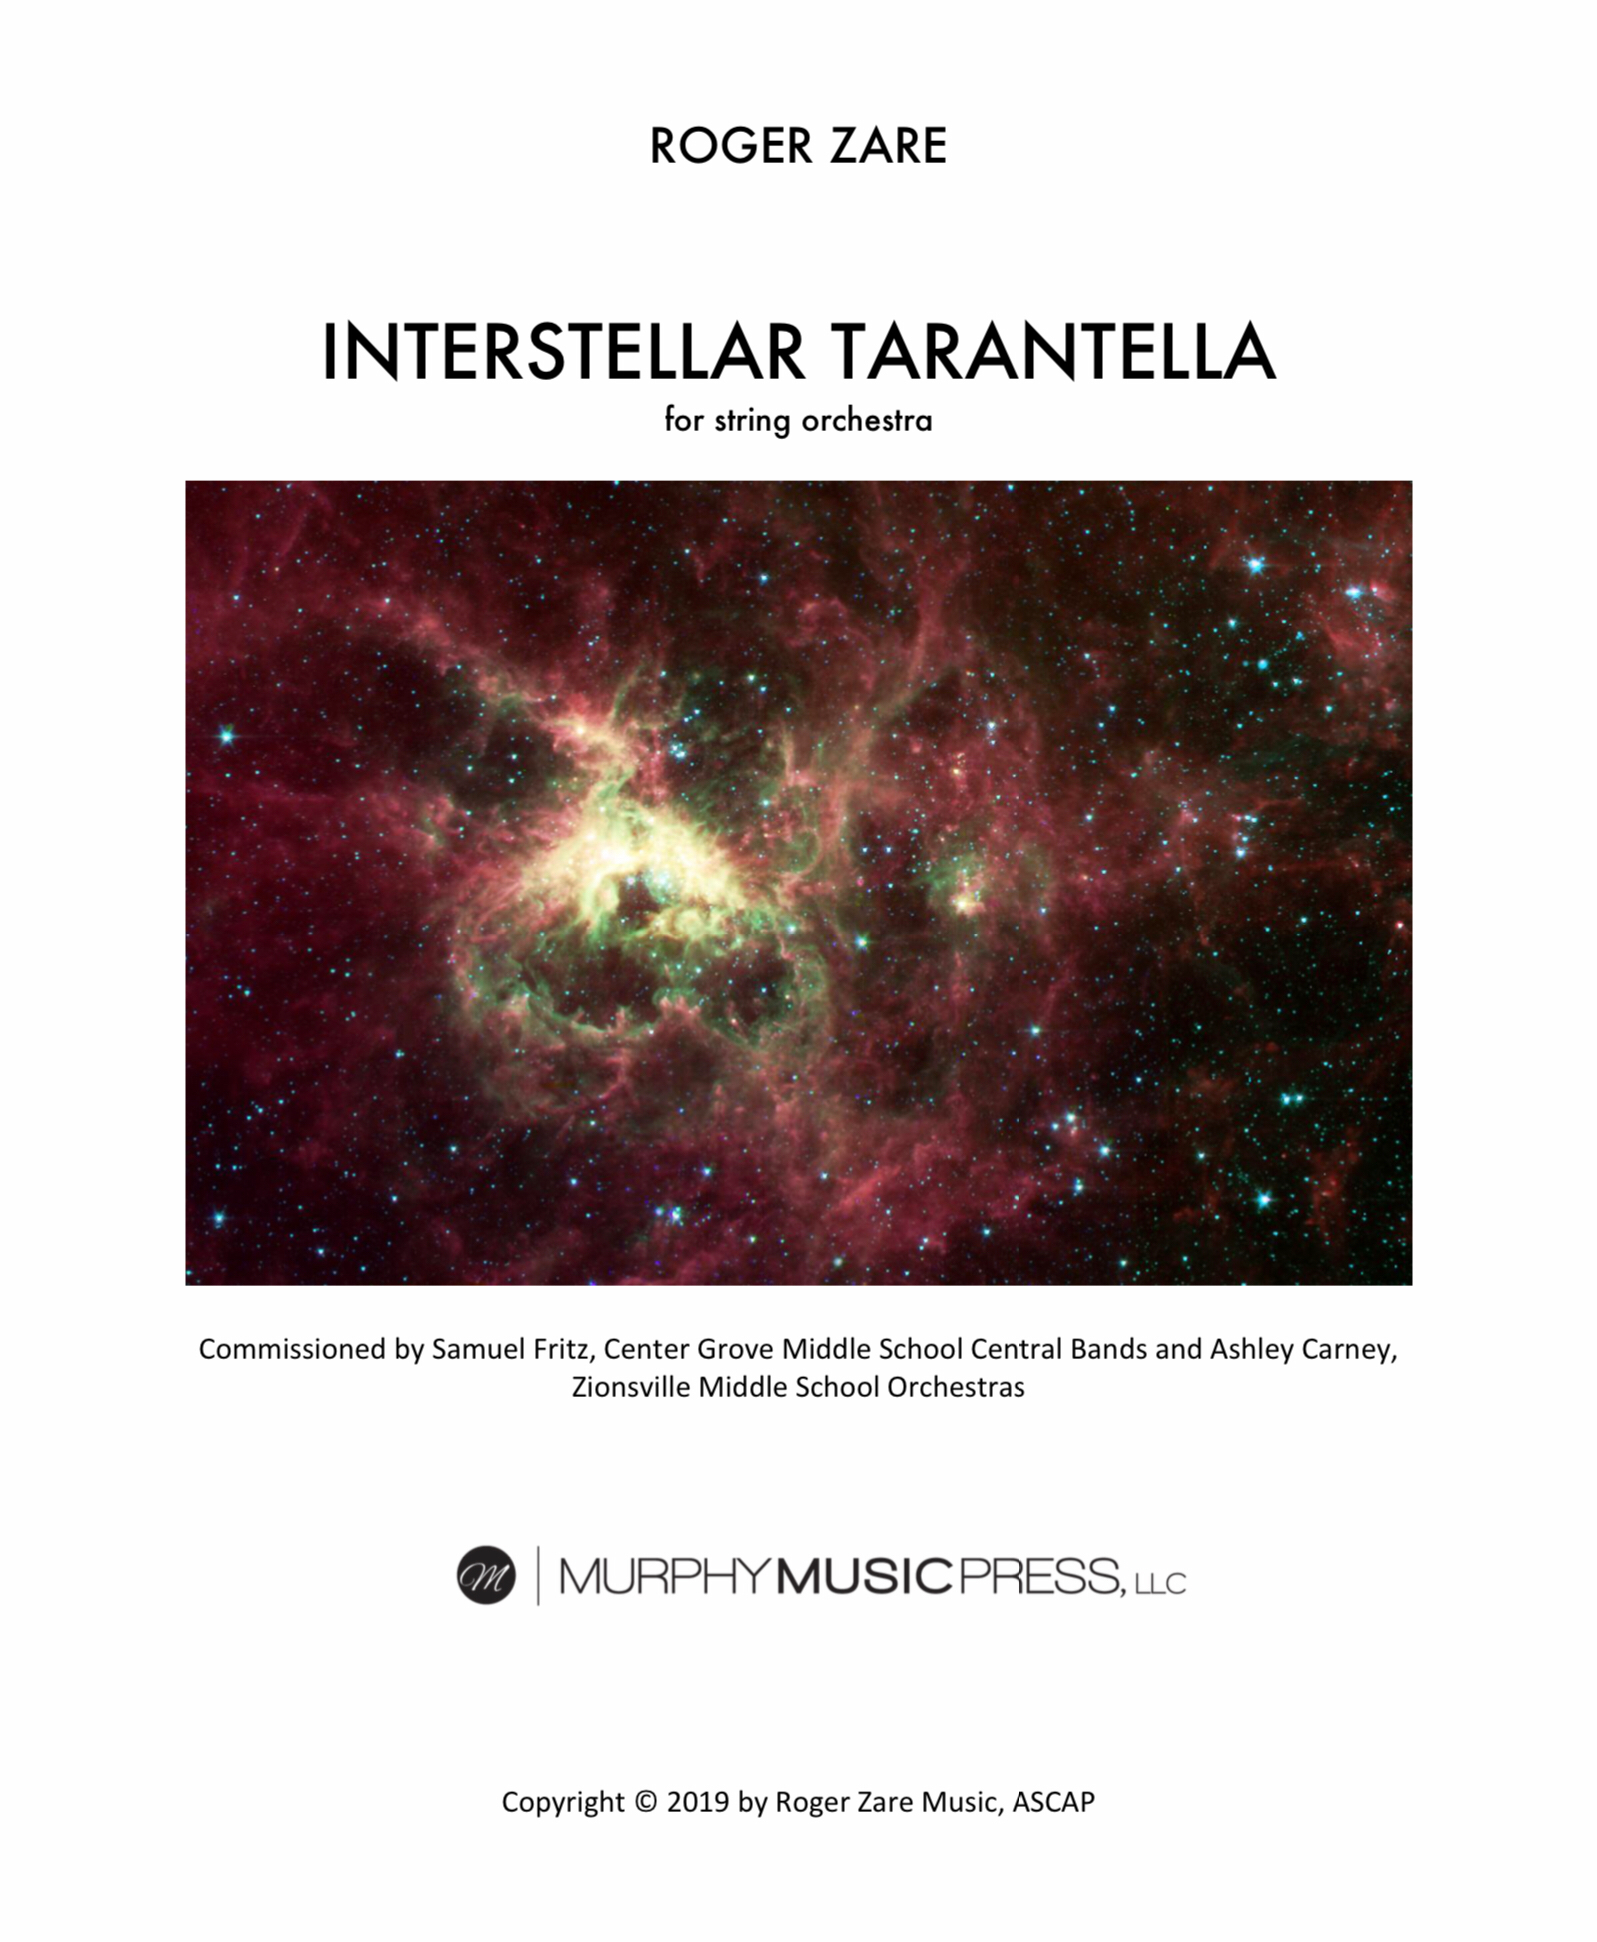 Interstellar Tarantella (String Orchestra Version, Score Only) by Roger Zare